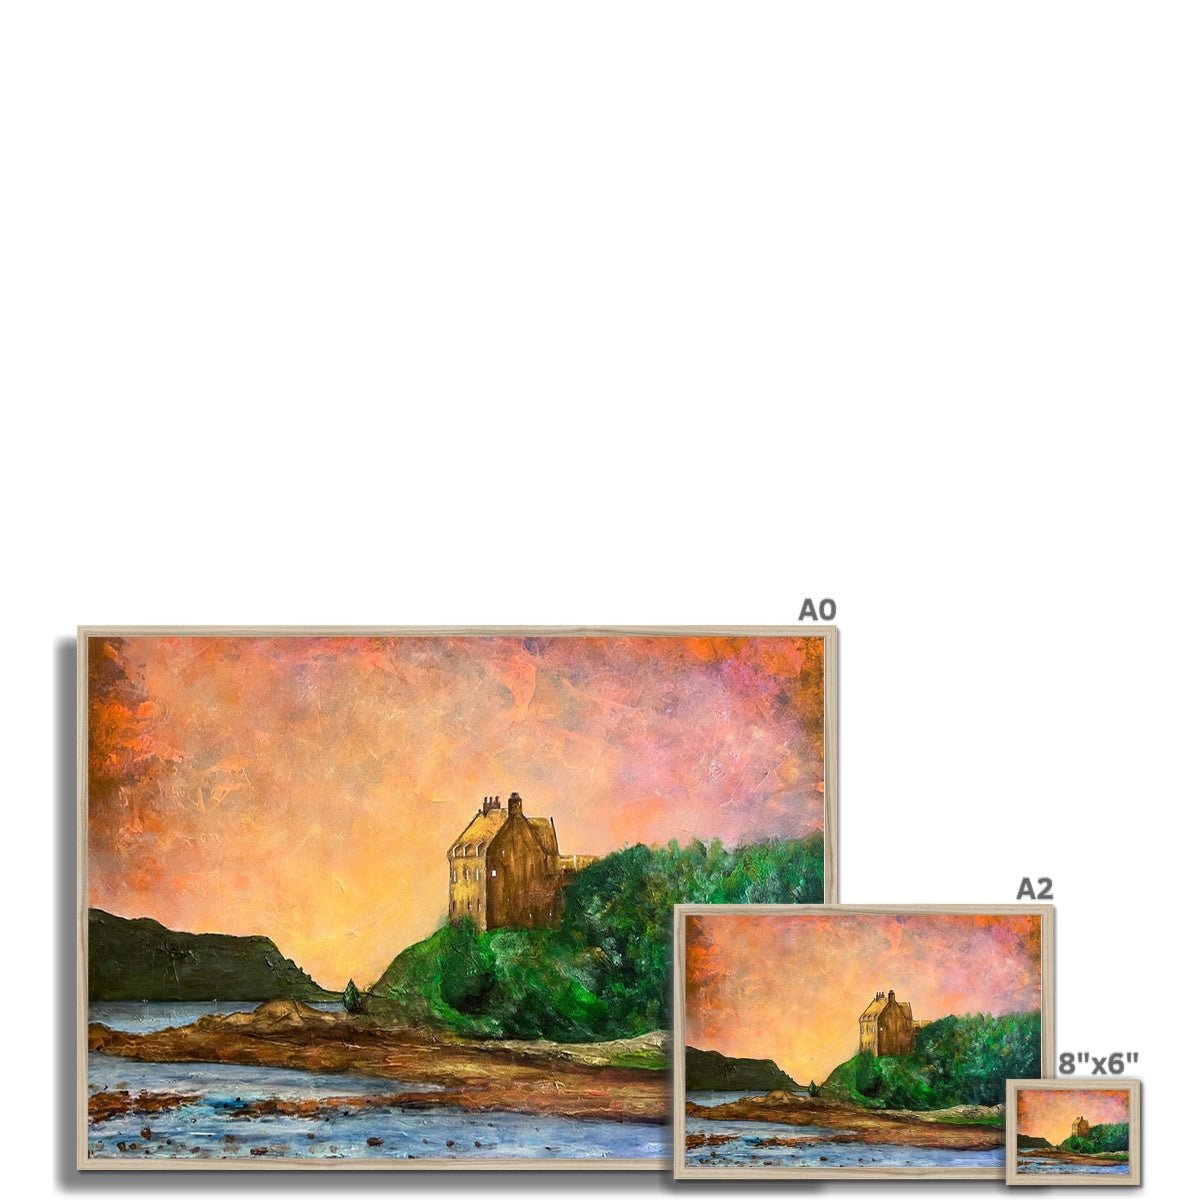 Duntrune Castle Painting | Framed Prints From Scotland-Framed Prints-Scottish Castles Art Gallery-Paintings, Prints, Homeware, Art Gifts From Scotland By Scottish Artist Kevin Hunter